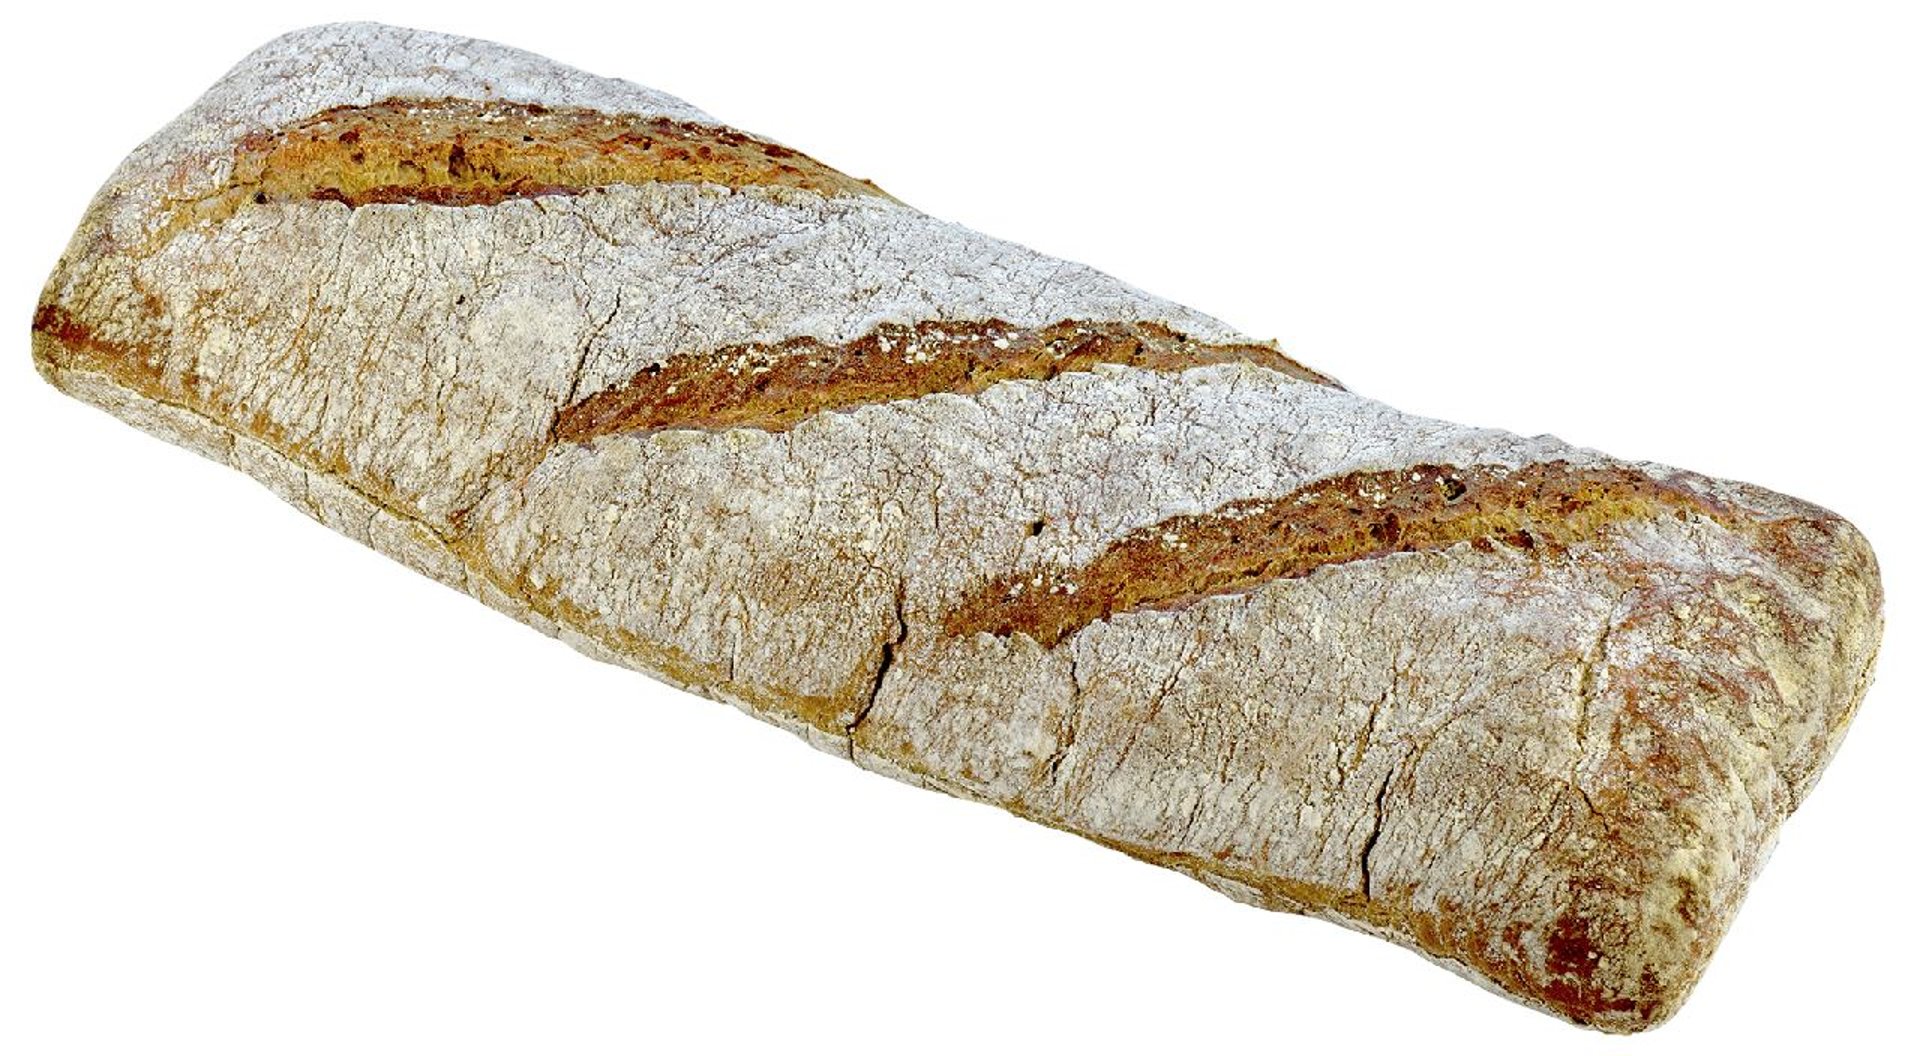 Edna - Stullen-Brot Vegan, tiefgefroren, vorgebacken, 4 Stück à 2050 g - 8,2 kg Karton